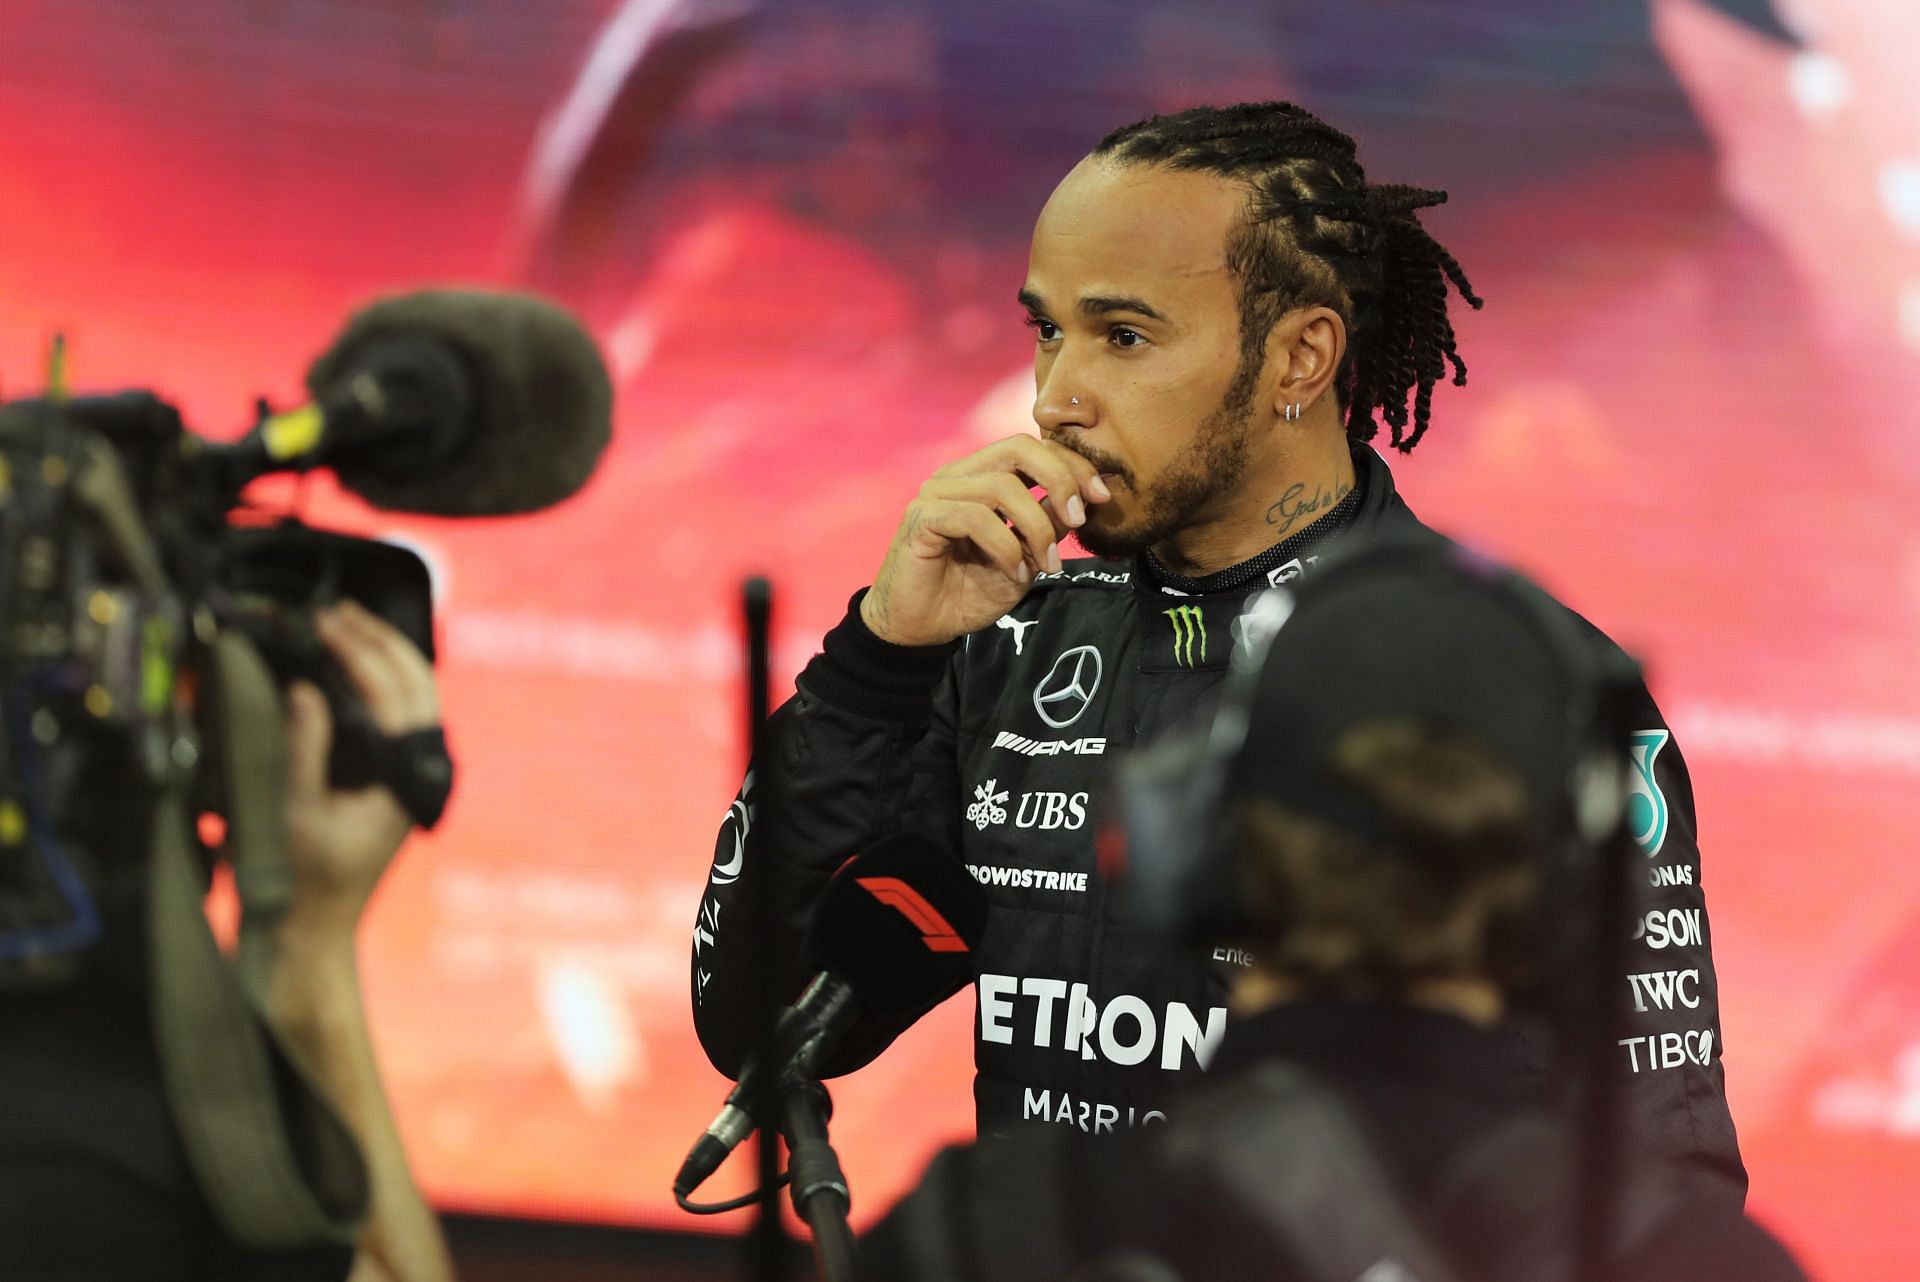 F1 Grand Prix of Abu Dhabi - Lewis Hamilton finishes second